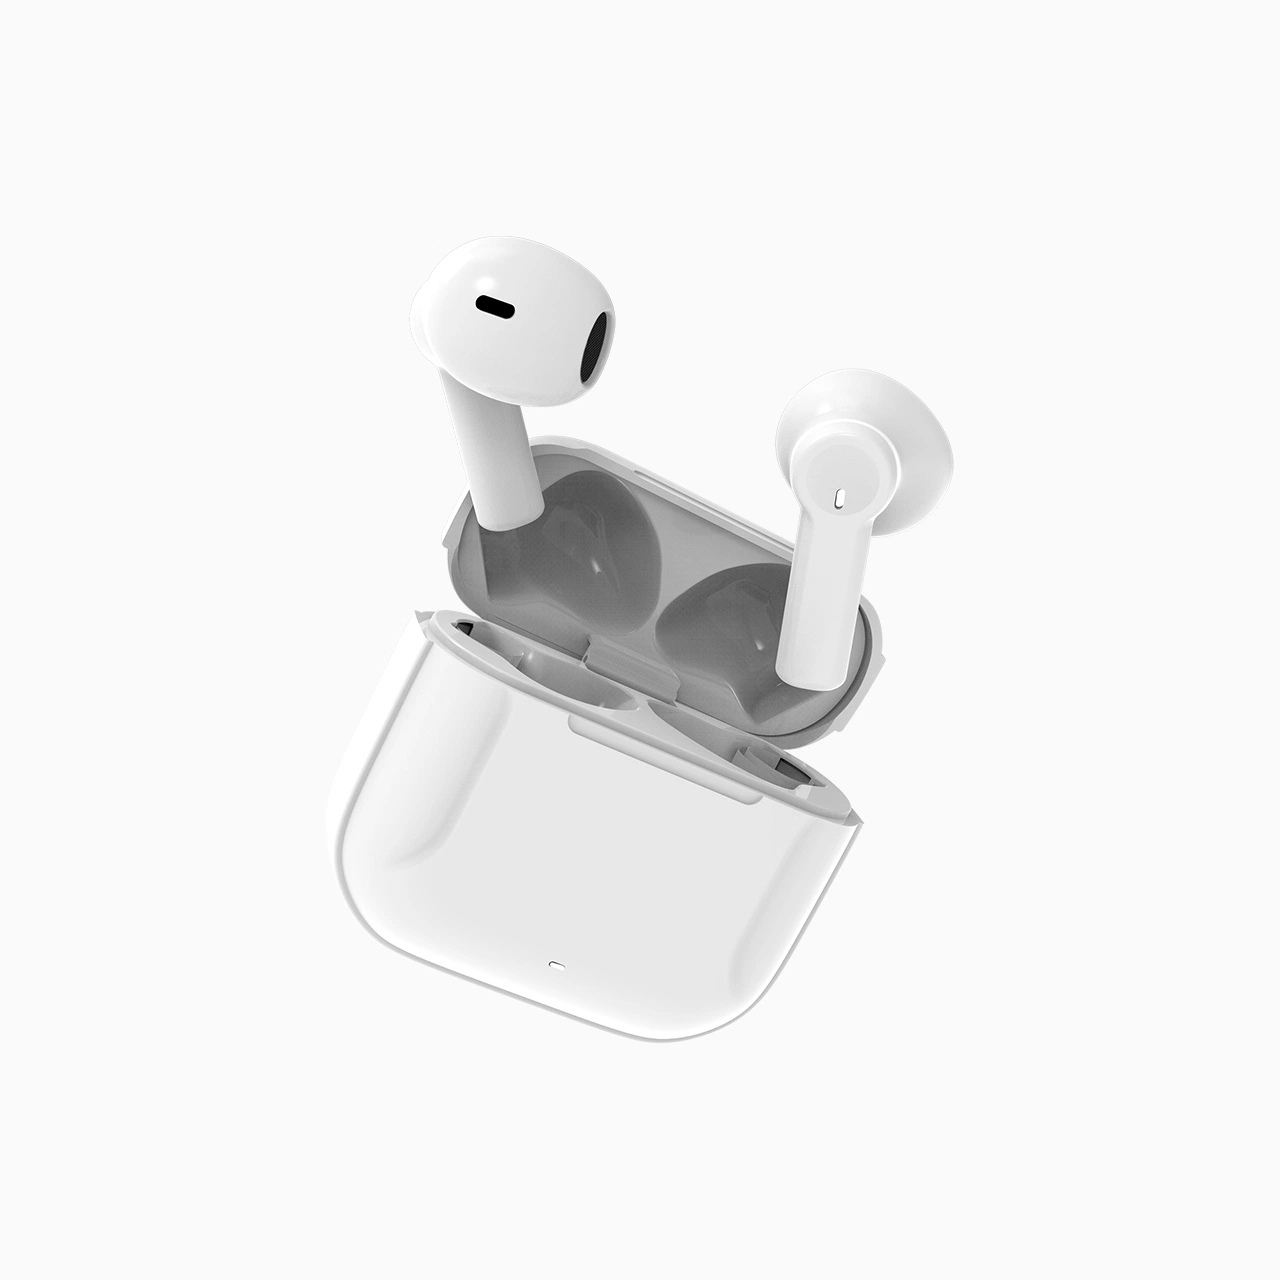 New Tws Earbuds Waterproof Mini Wireless Handsfree Earphone Business Headphones